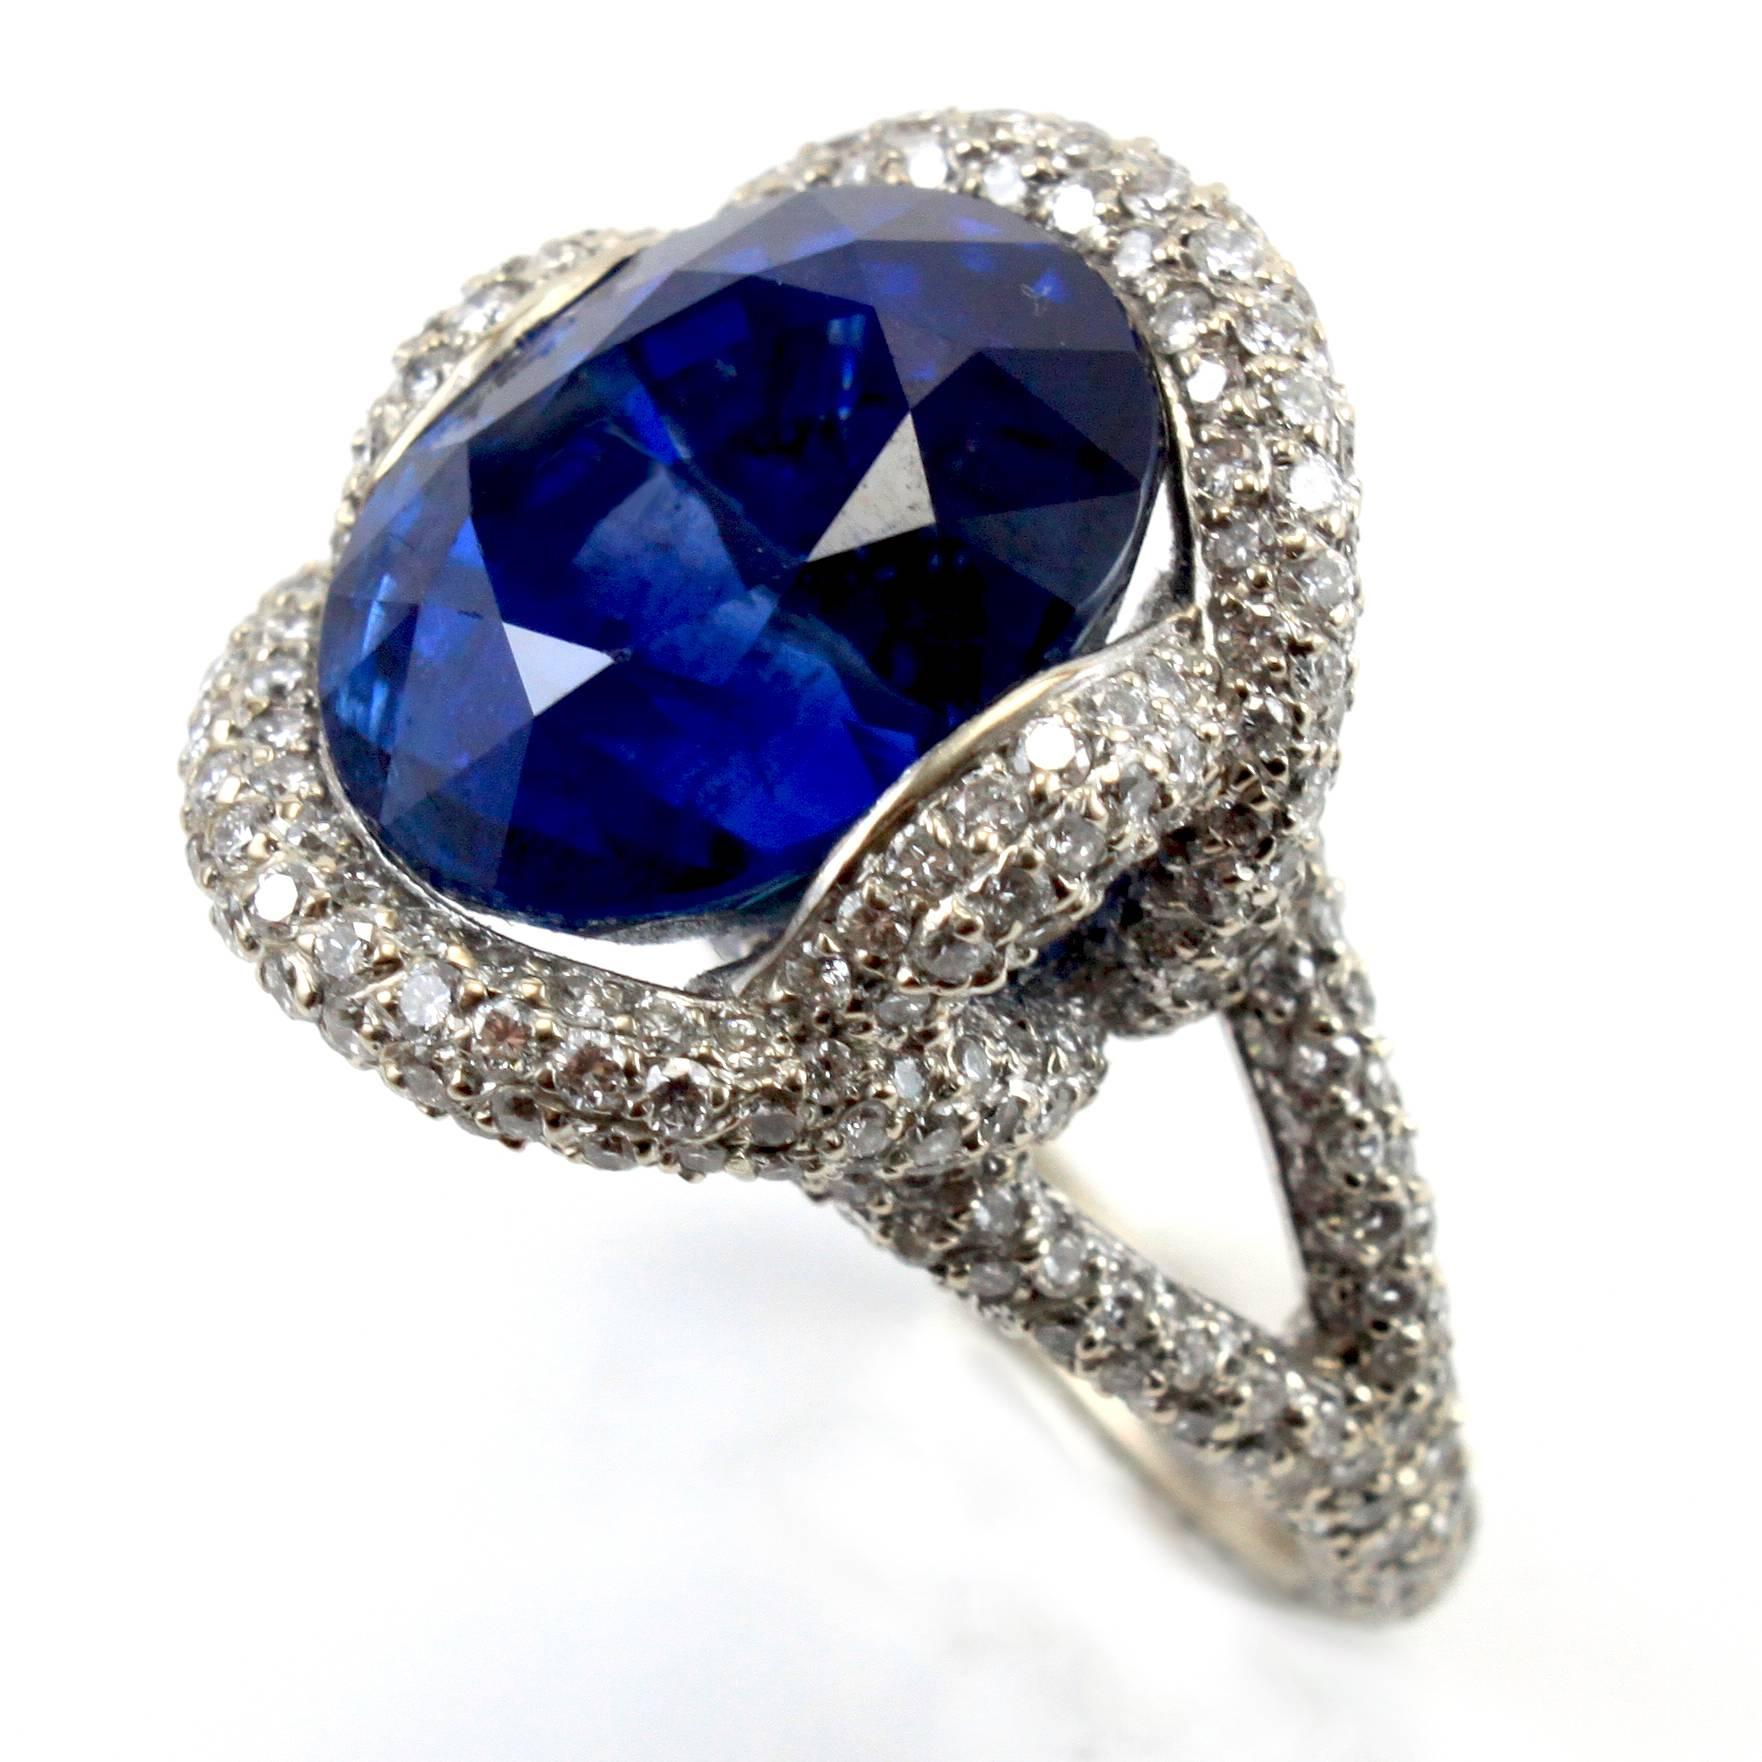 12 carat blue sapphire ring